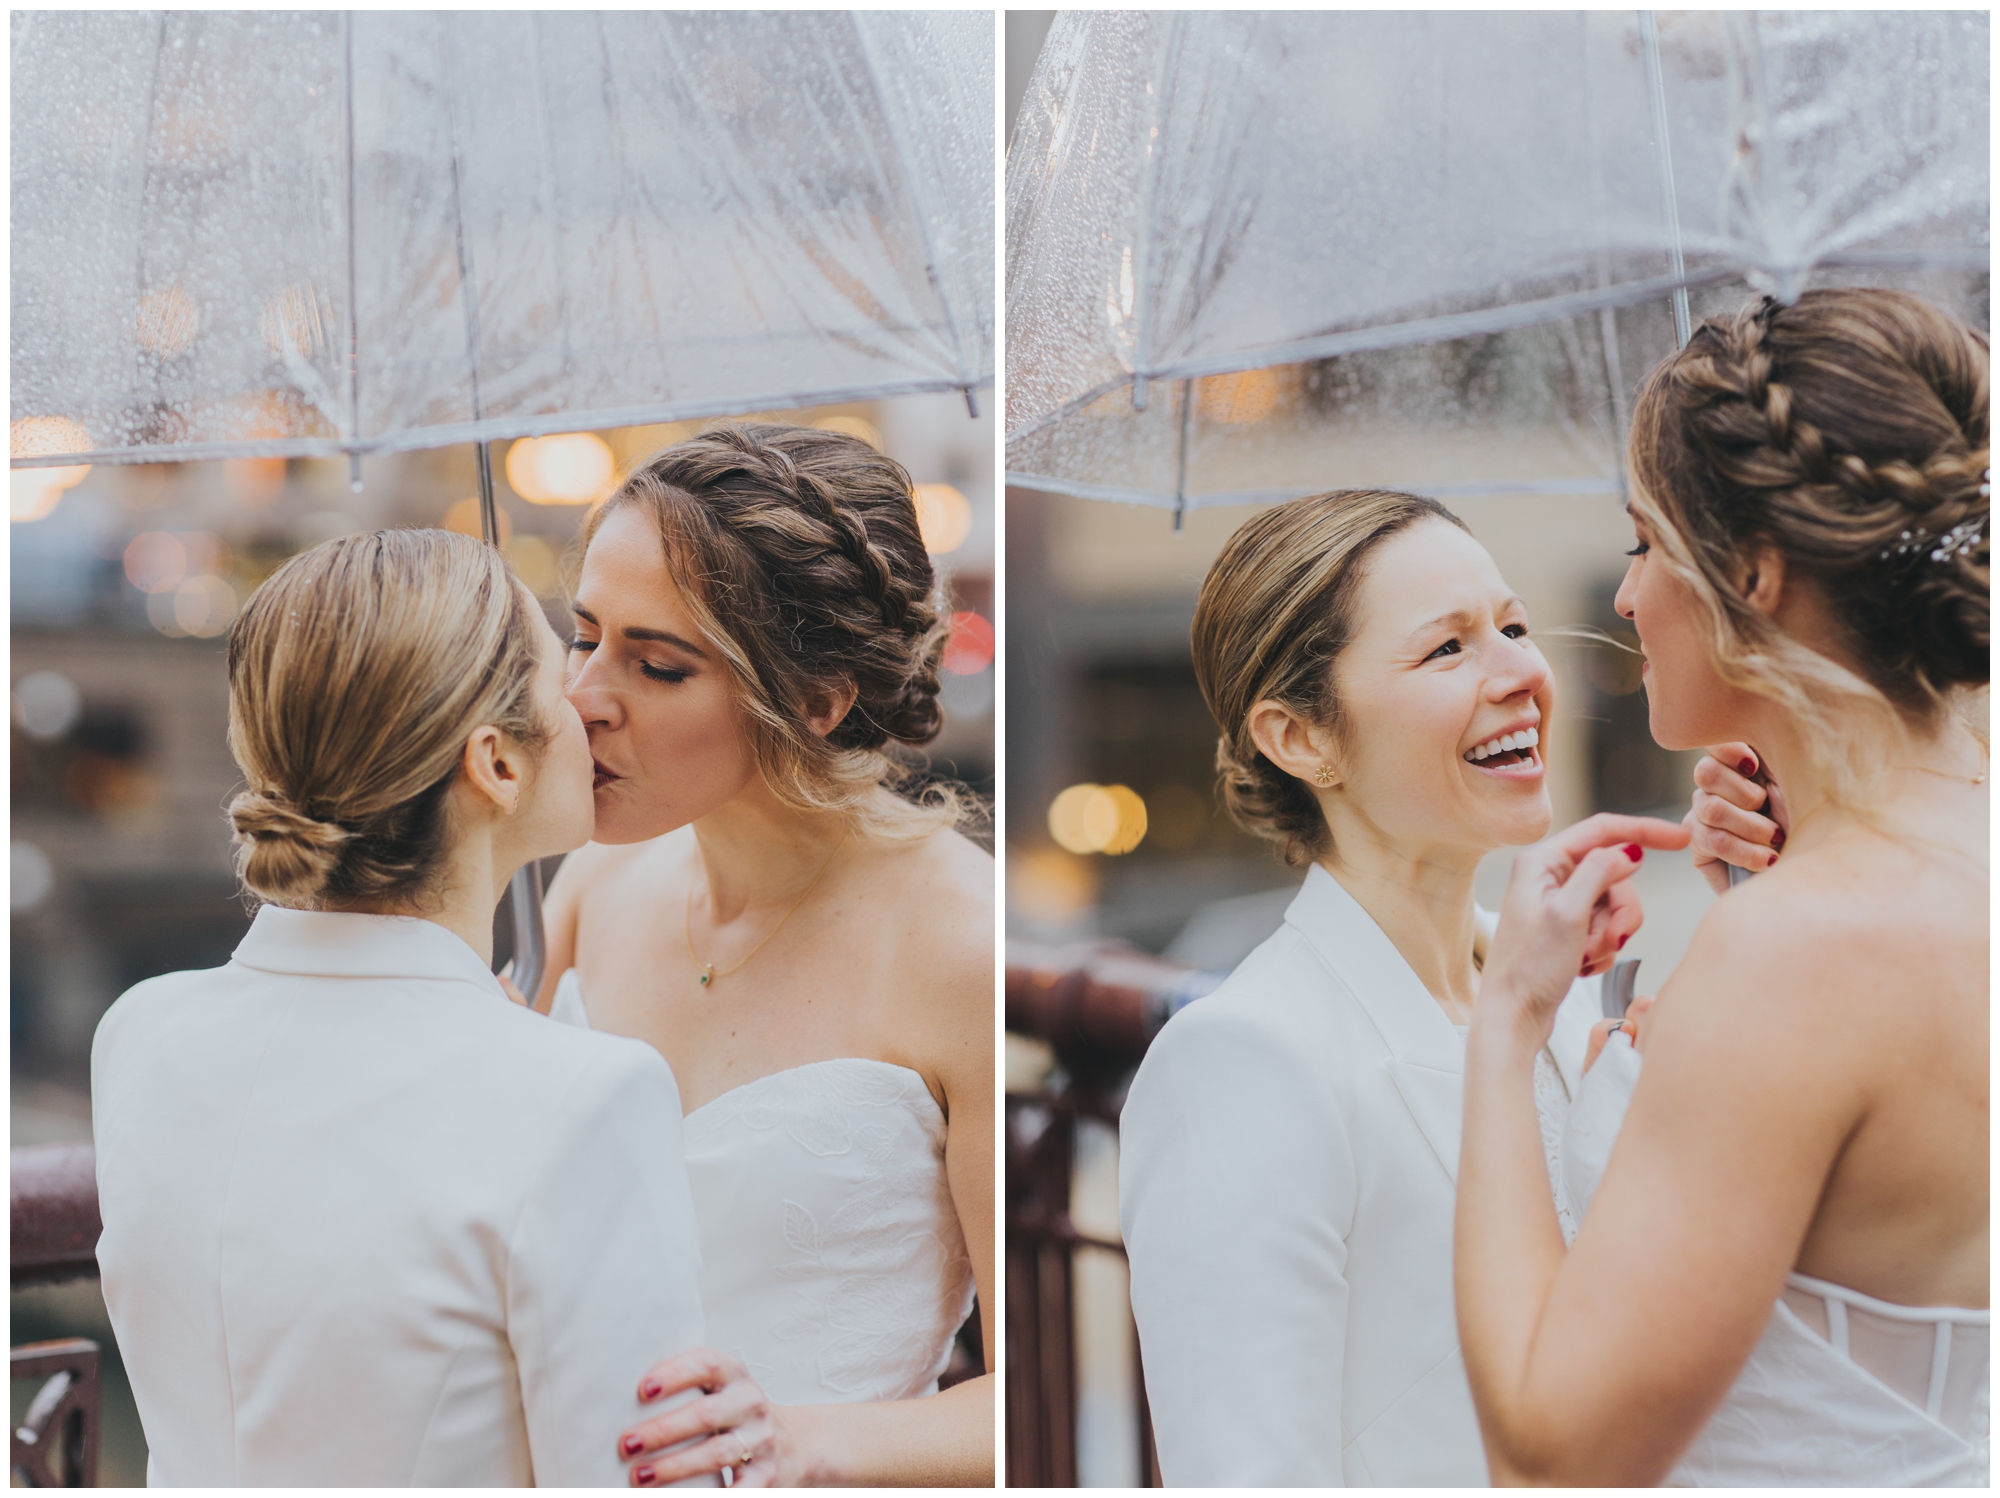 rainy day wedding; eloping in the rain; photos by Meg Adamik Creative